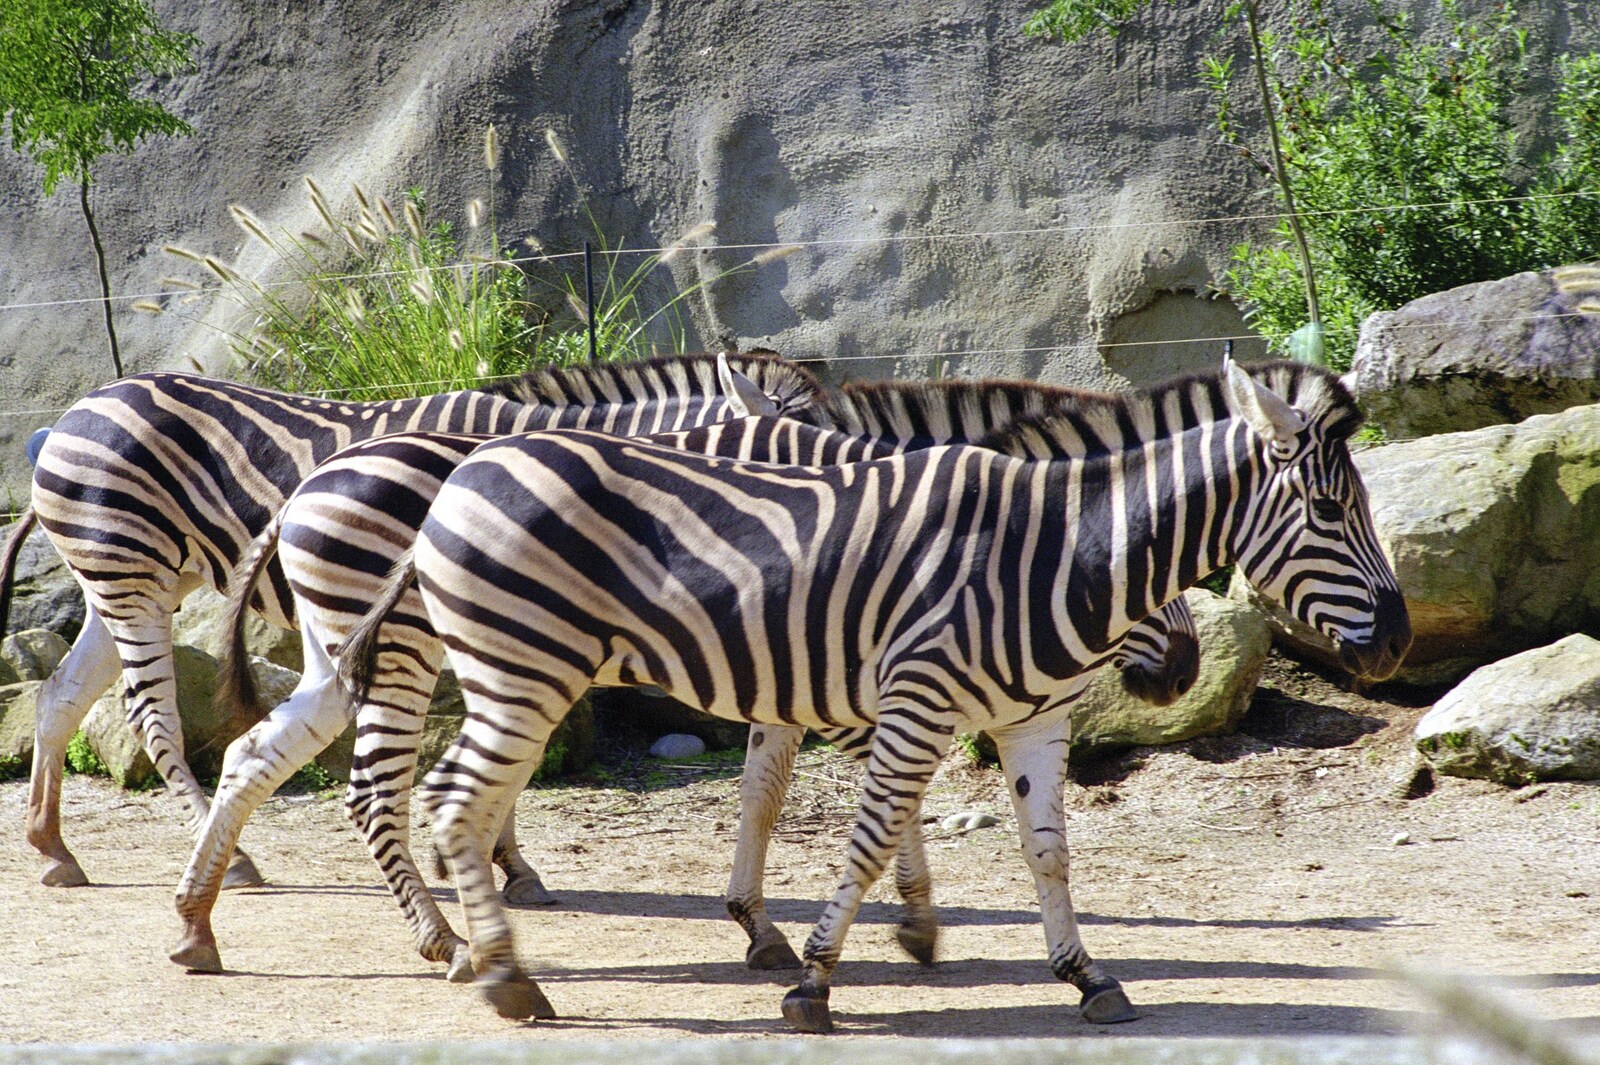 Stripey zebra from A Trip to the Zoo, Sydney, Australia - 7th April 2000